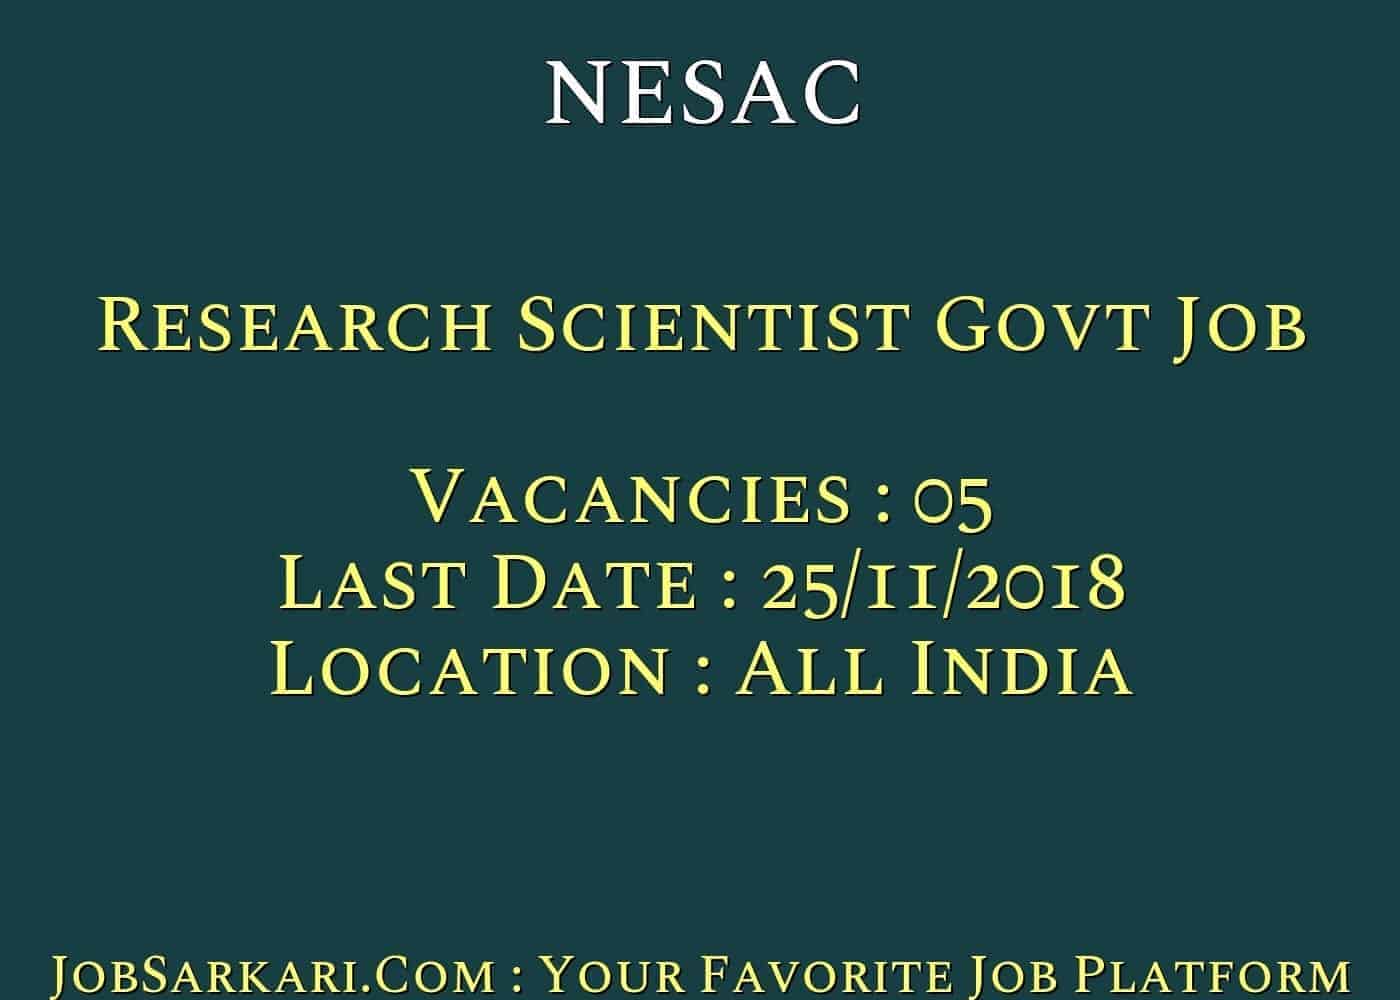 NESAC Recruitment 2018 for Research Scientist Govt Job